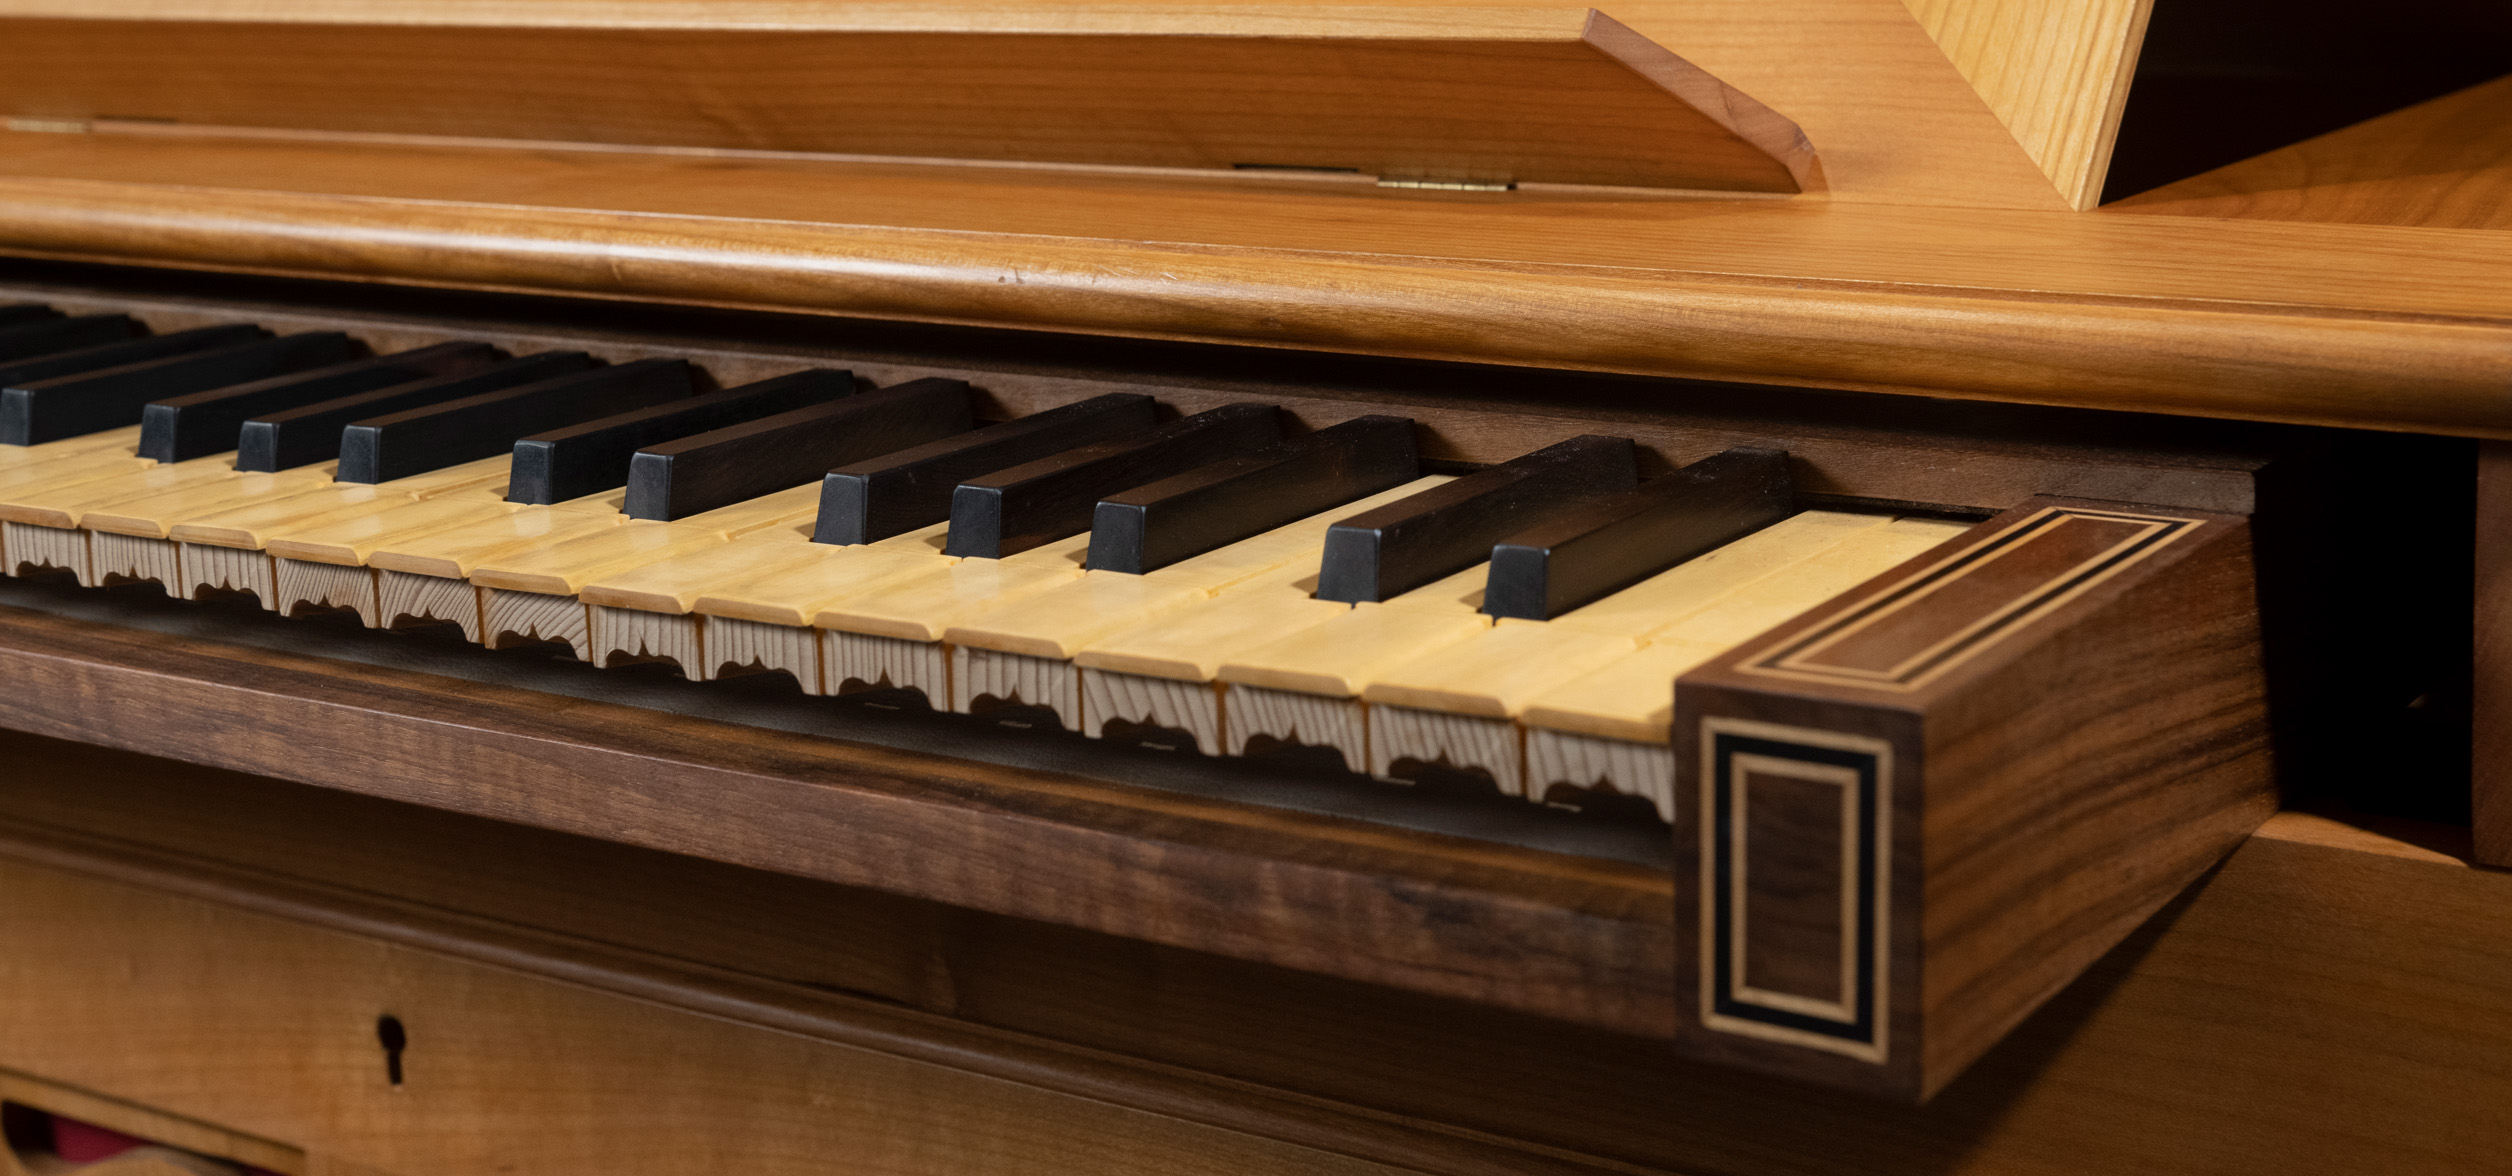 Keyboard gehst-organ